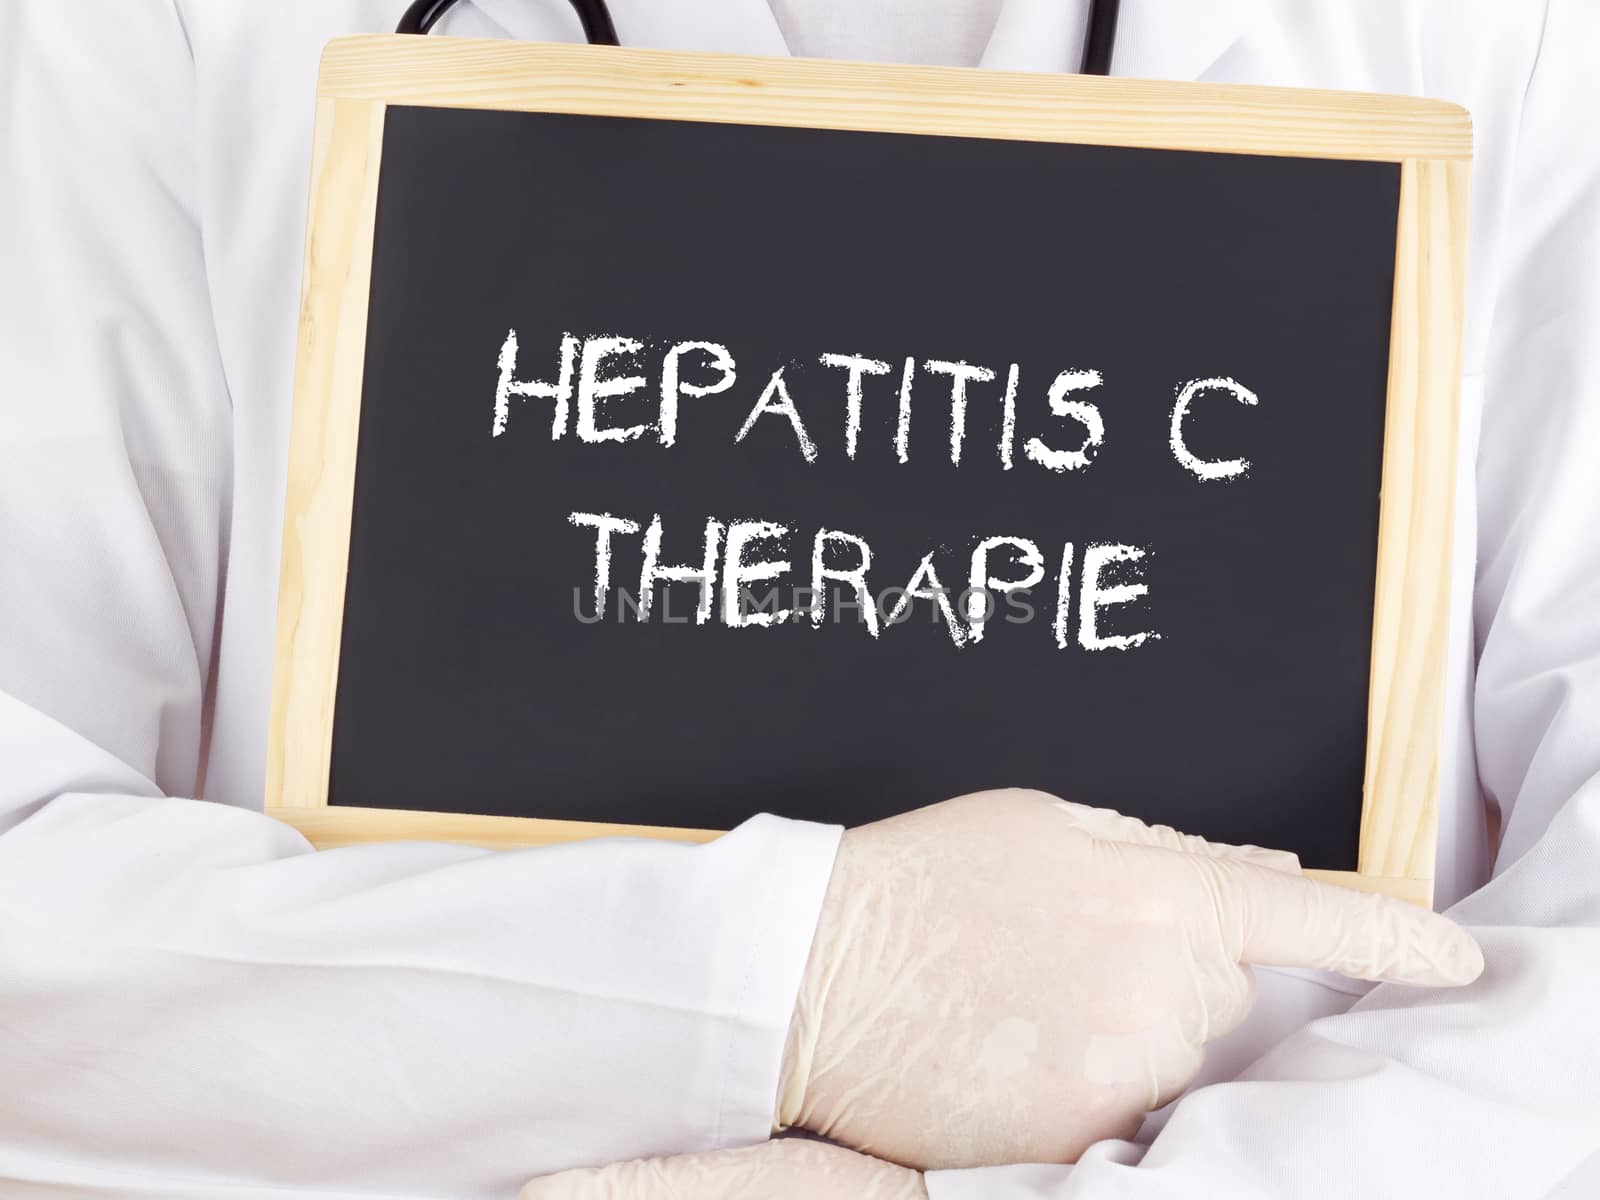 Doctor shows information: hepatitis-c-therapy in german